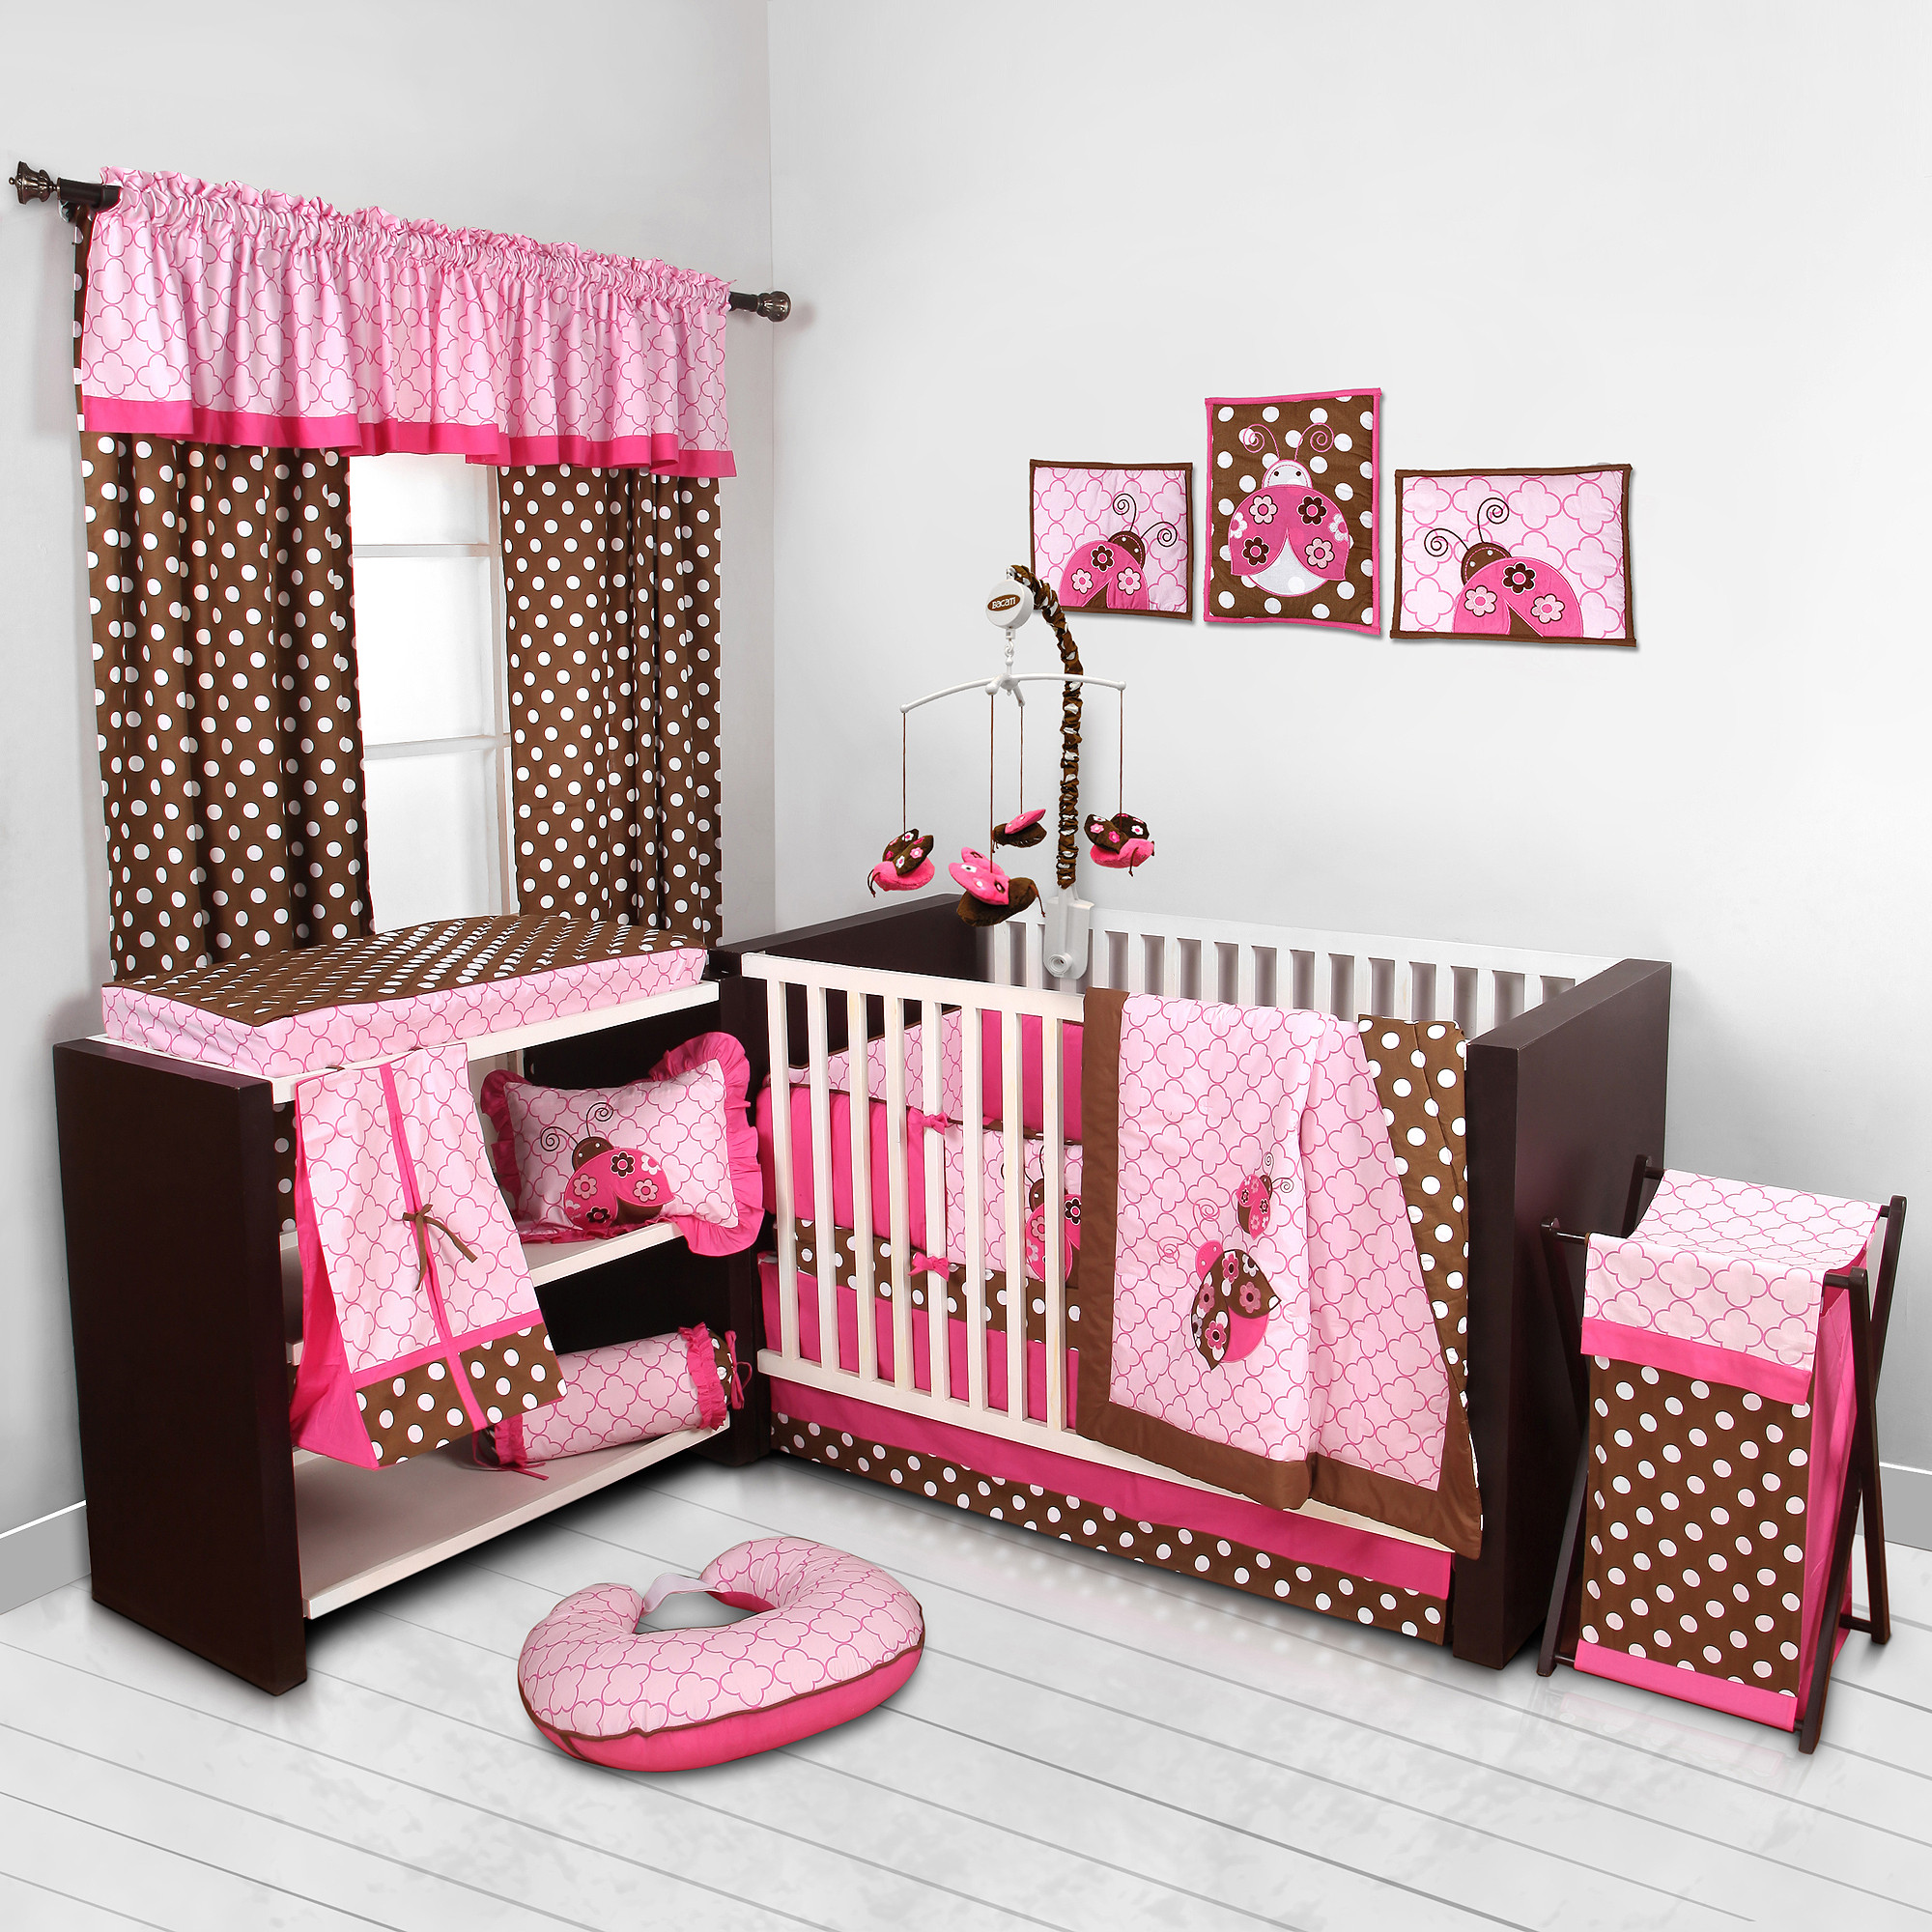 Walmart Baby Room Decor
 Ladybugs Pink Chocolate Crib Bedding Collection Walmart